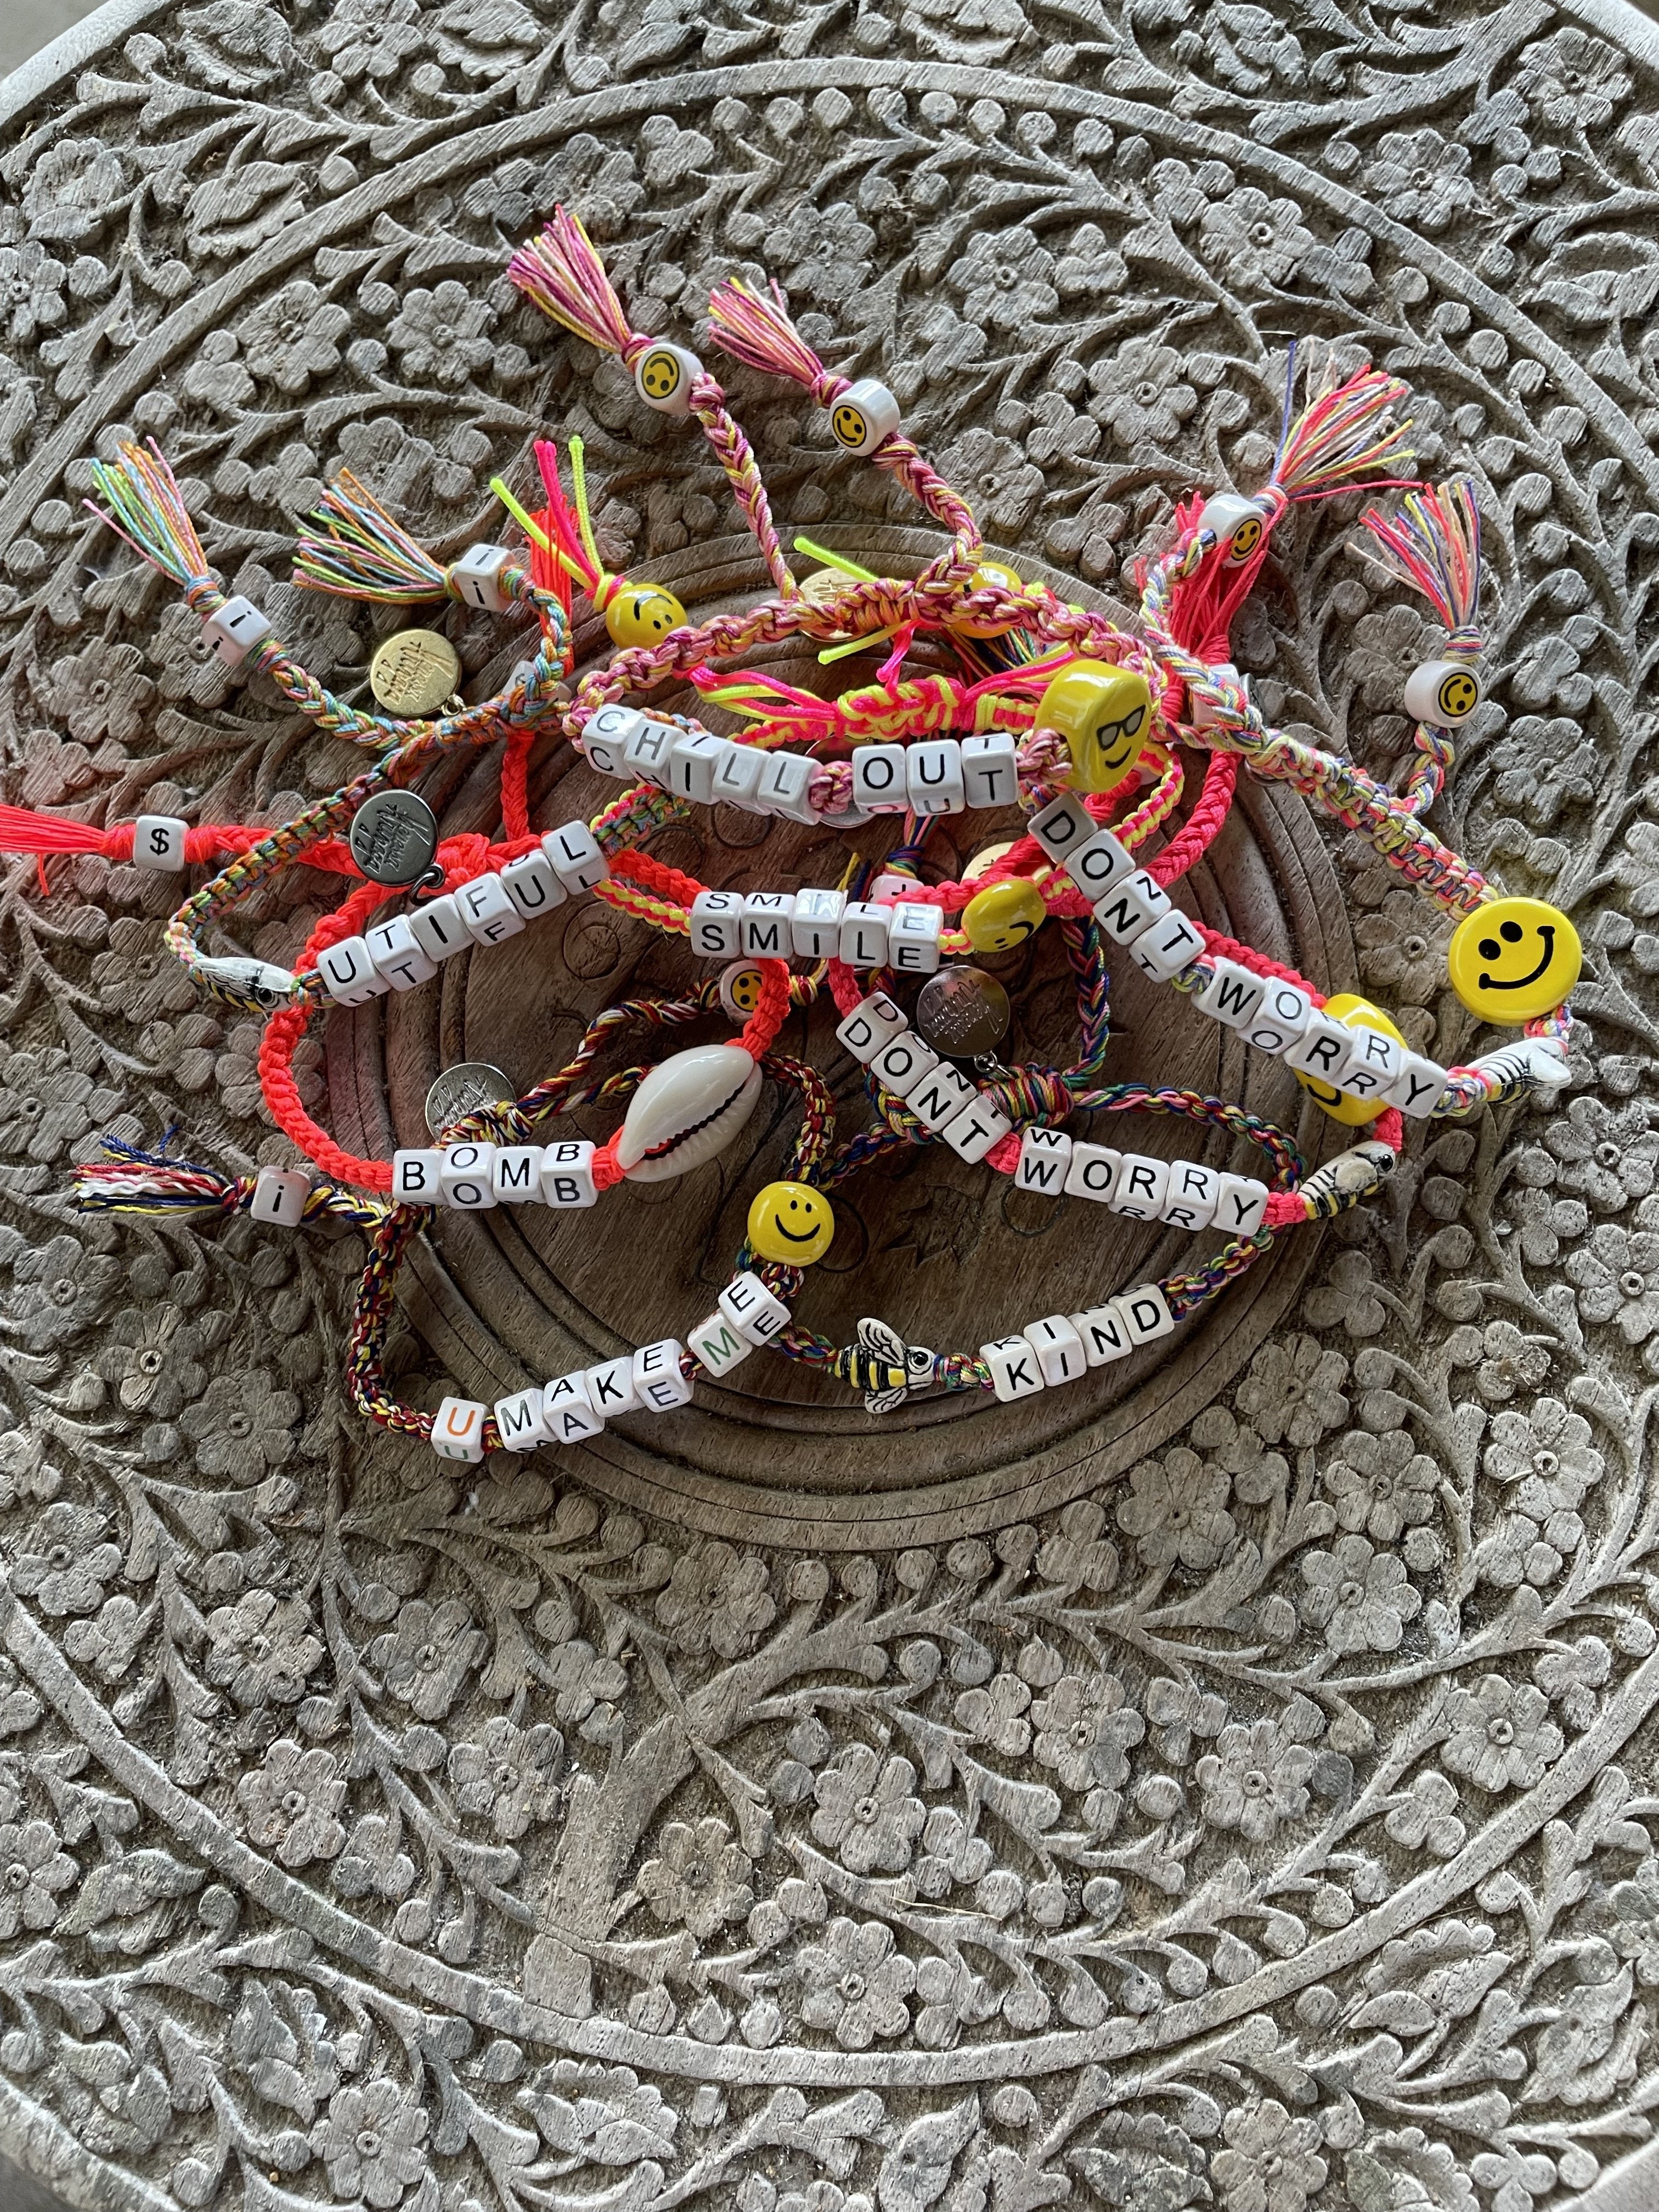 fun colourful bracelets with messages venessa arizaga